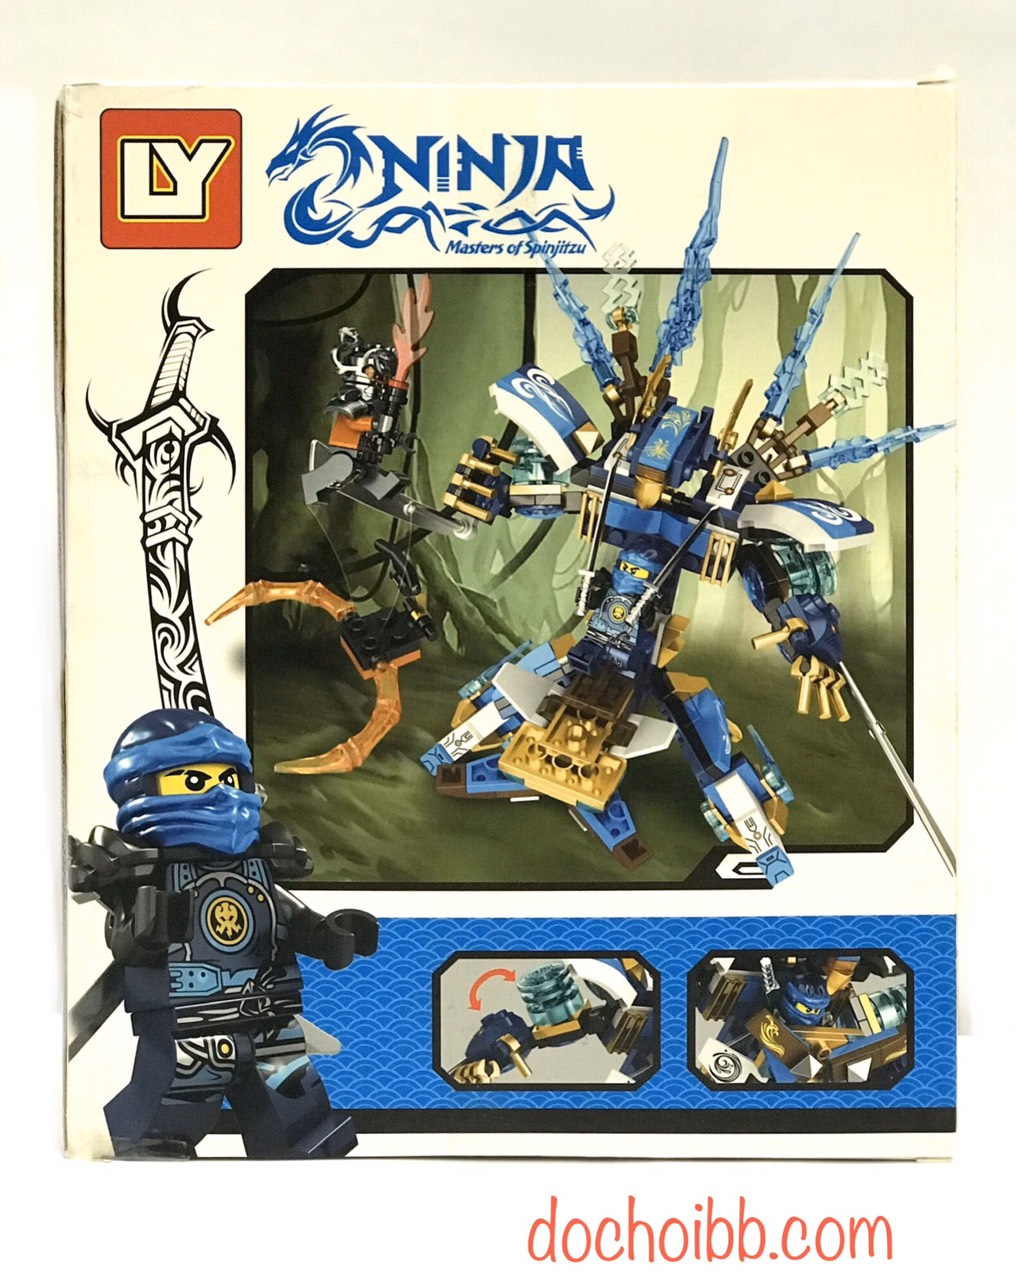 Lego Ninja 68022 (Combo Mua 1 Tặng 1)